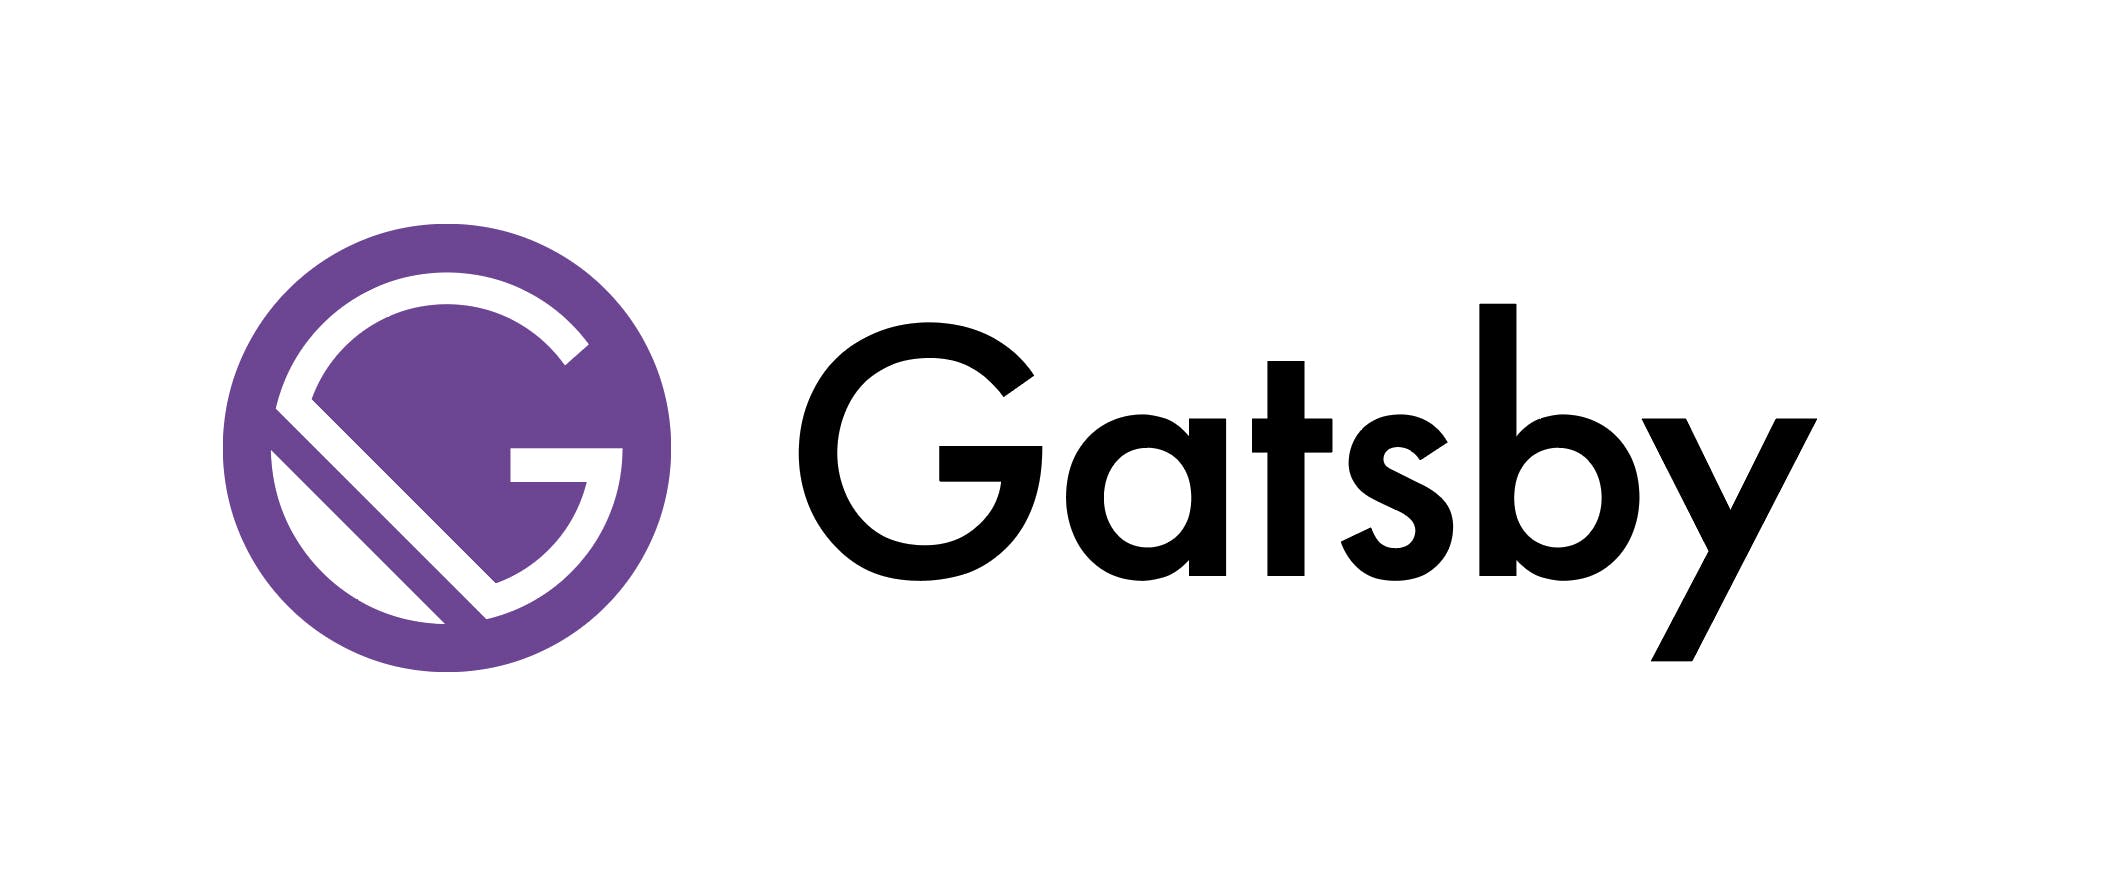 gatsby-logo.jpg